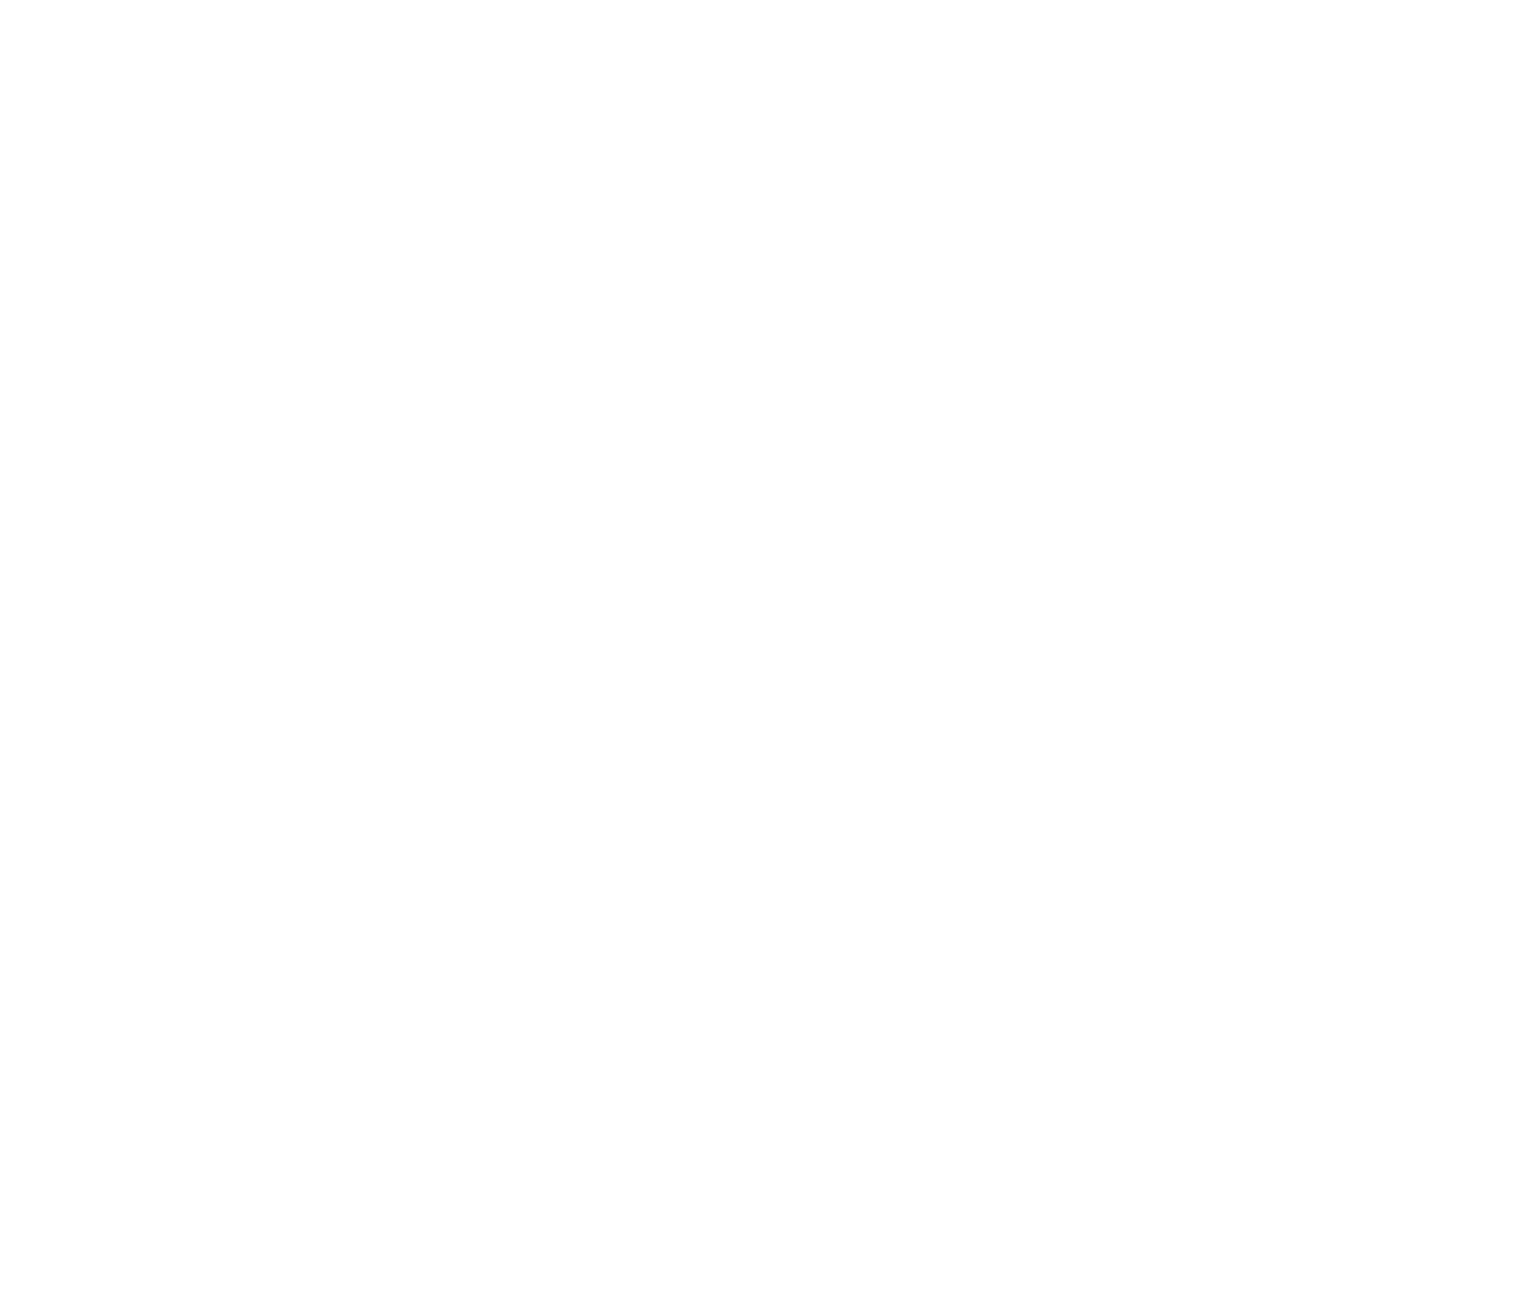 Quest Resource Holding logo large for dark backgrounds (transparent PNG)